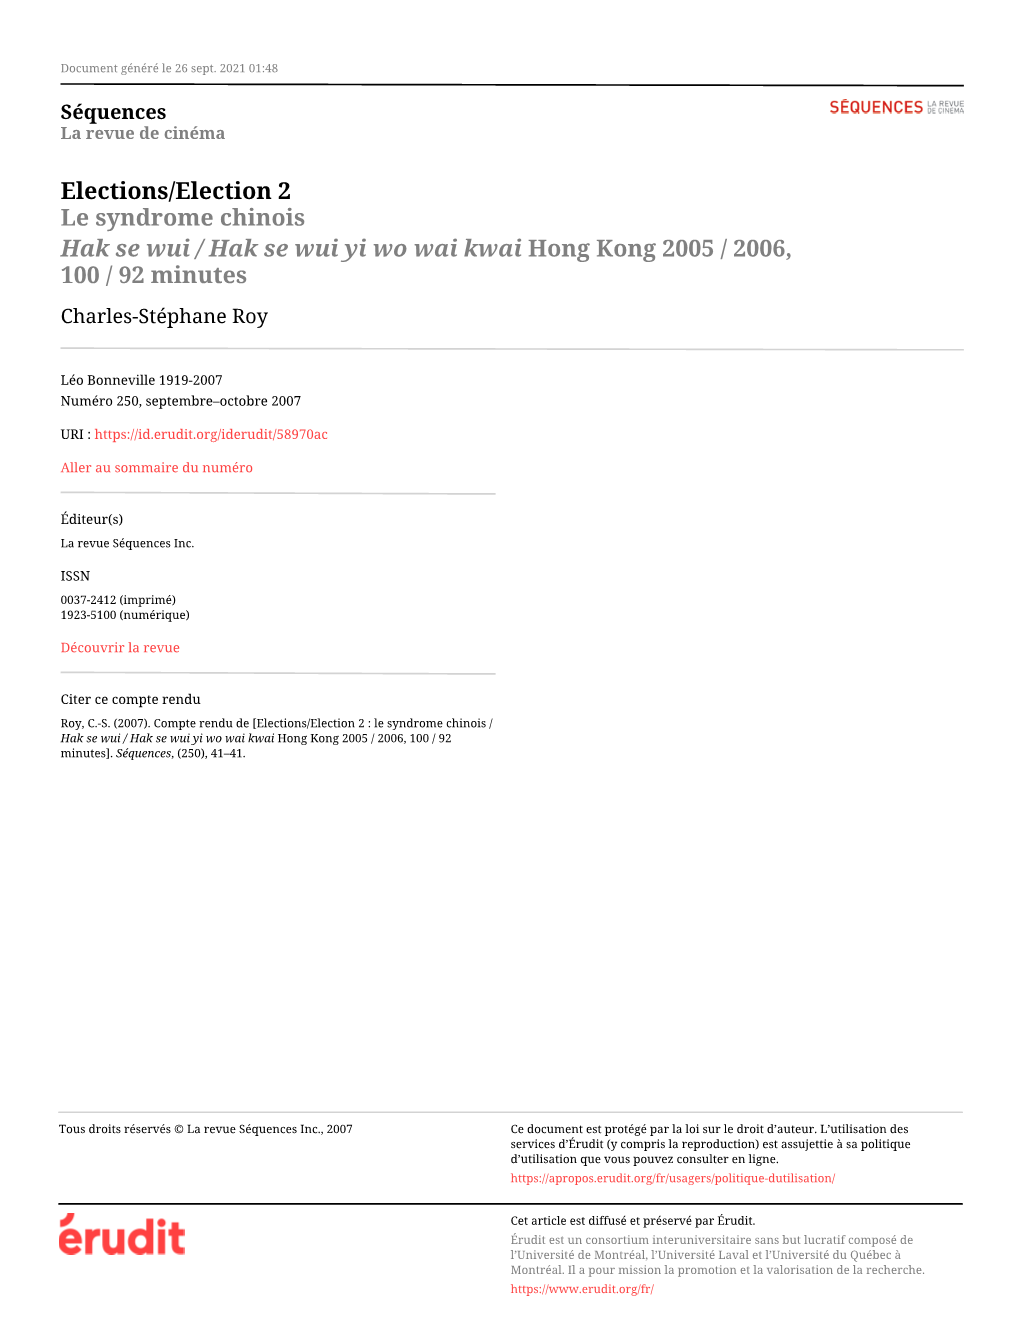 Elections/Election 2 Le Syndrome Chinois Hak Se Wui / Hak Se Wui Yi Wo Wai Kwai Hong Kong 2005 / 2006, 100 / 92 Minutes Charles-Stéphane Roy